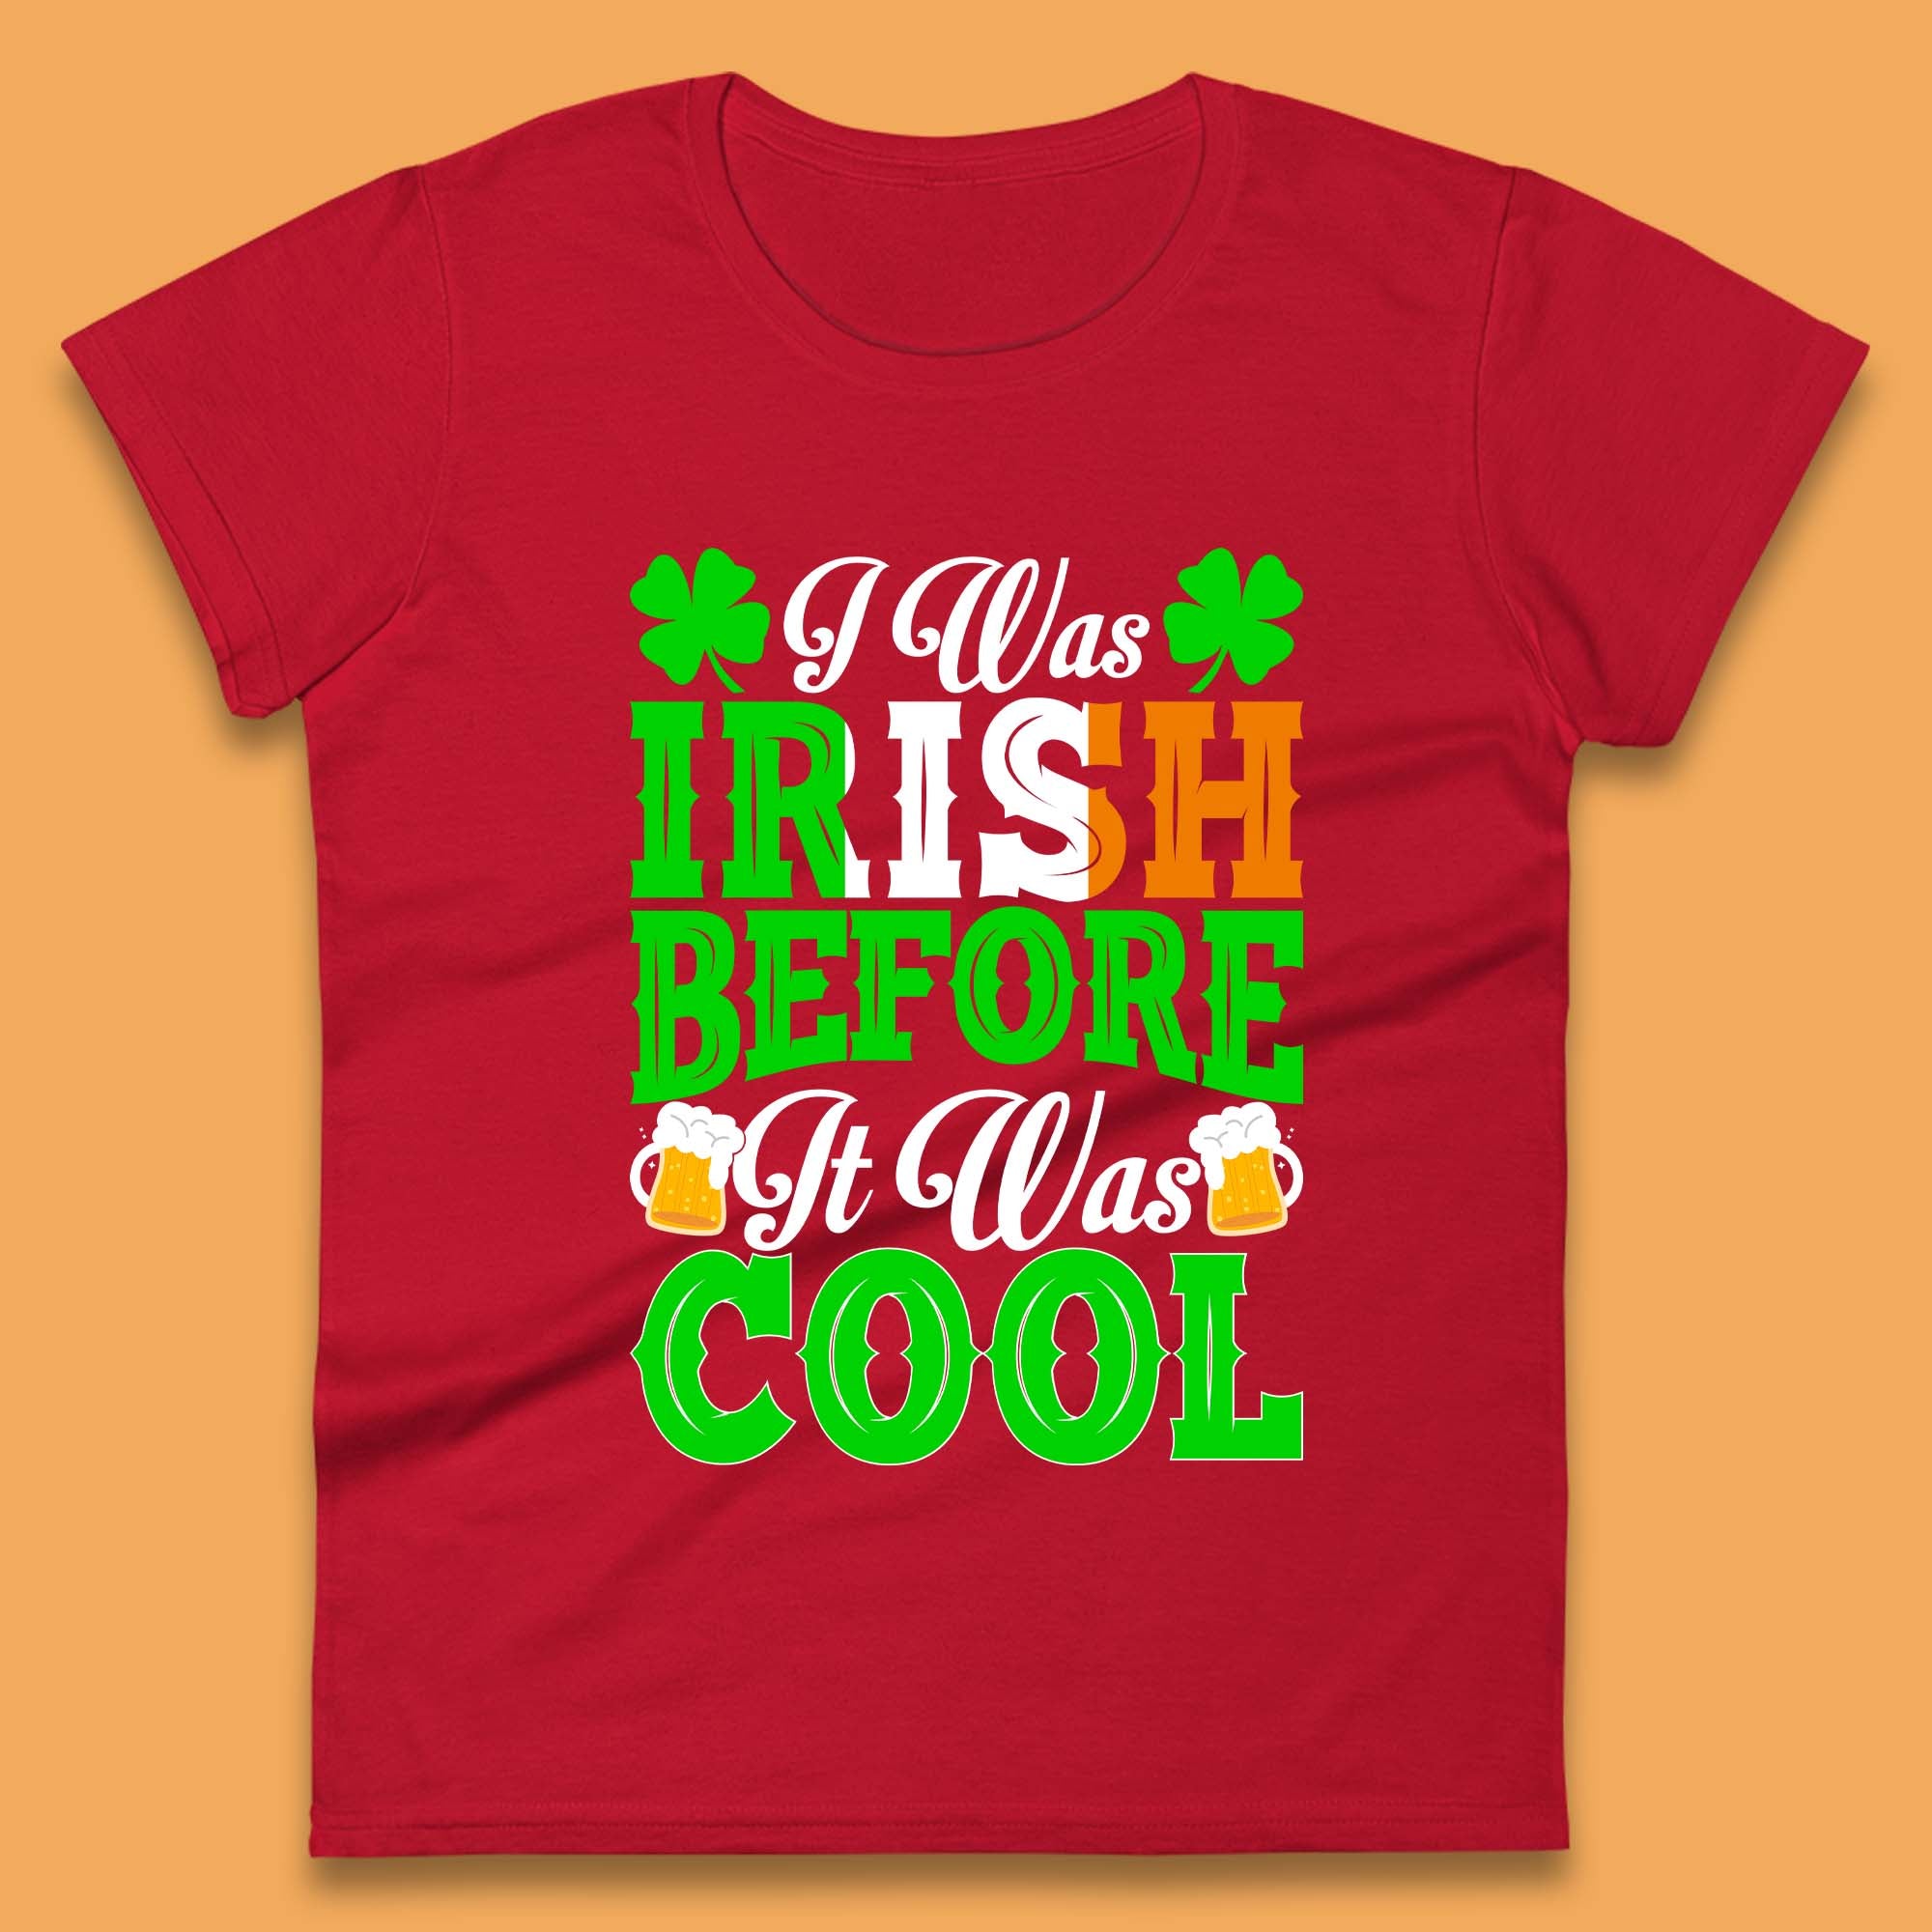 I Was Irish Before It Was Cool Womens T-Shirt